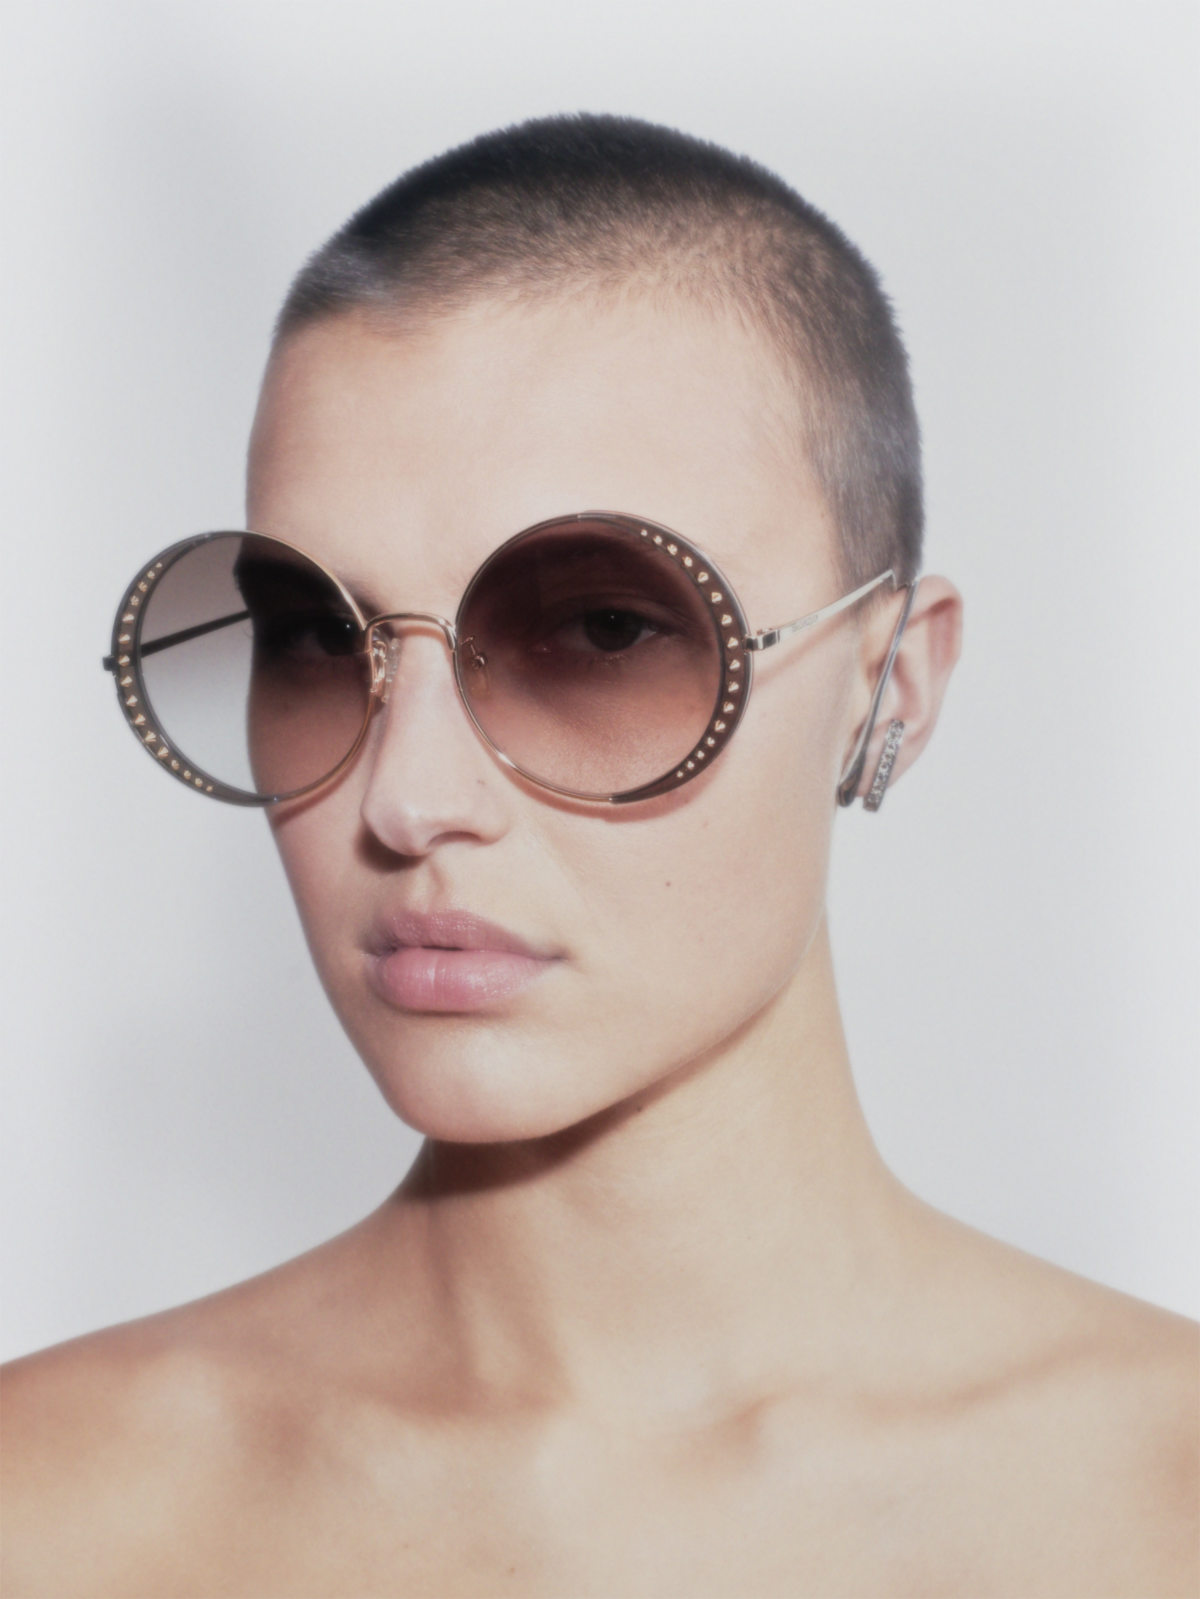 Alexander McQueen's Spring-Summer 2021 Women’s Eyewear